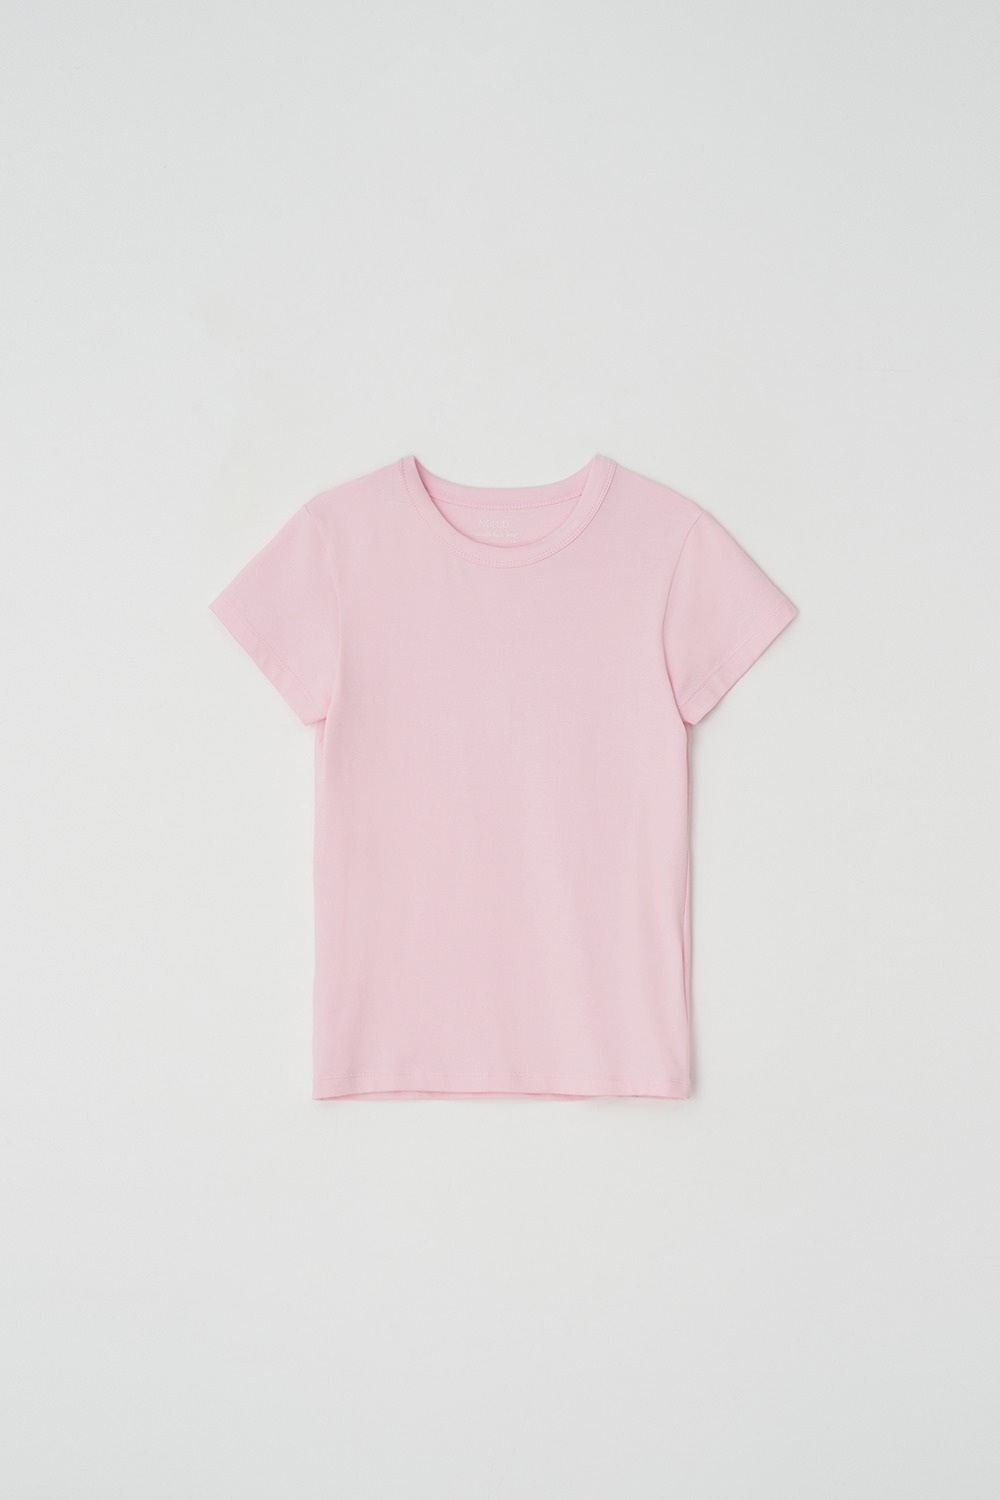 Round short sleeves (Pink)